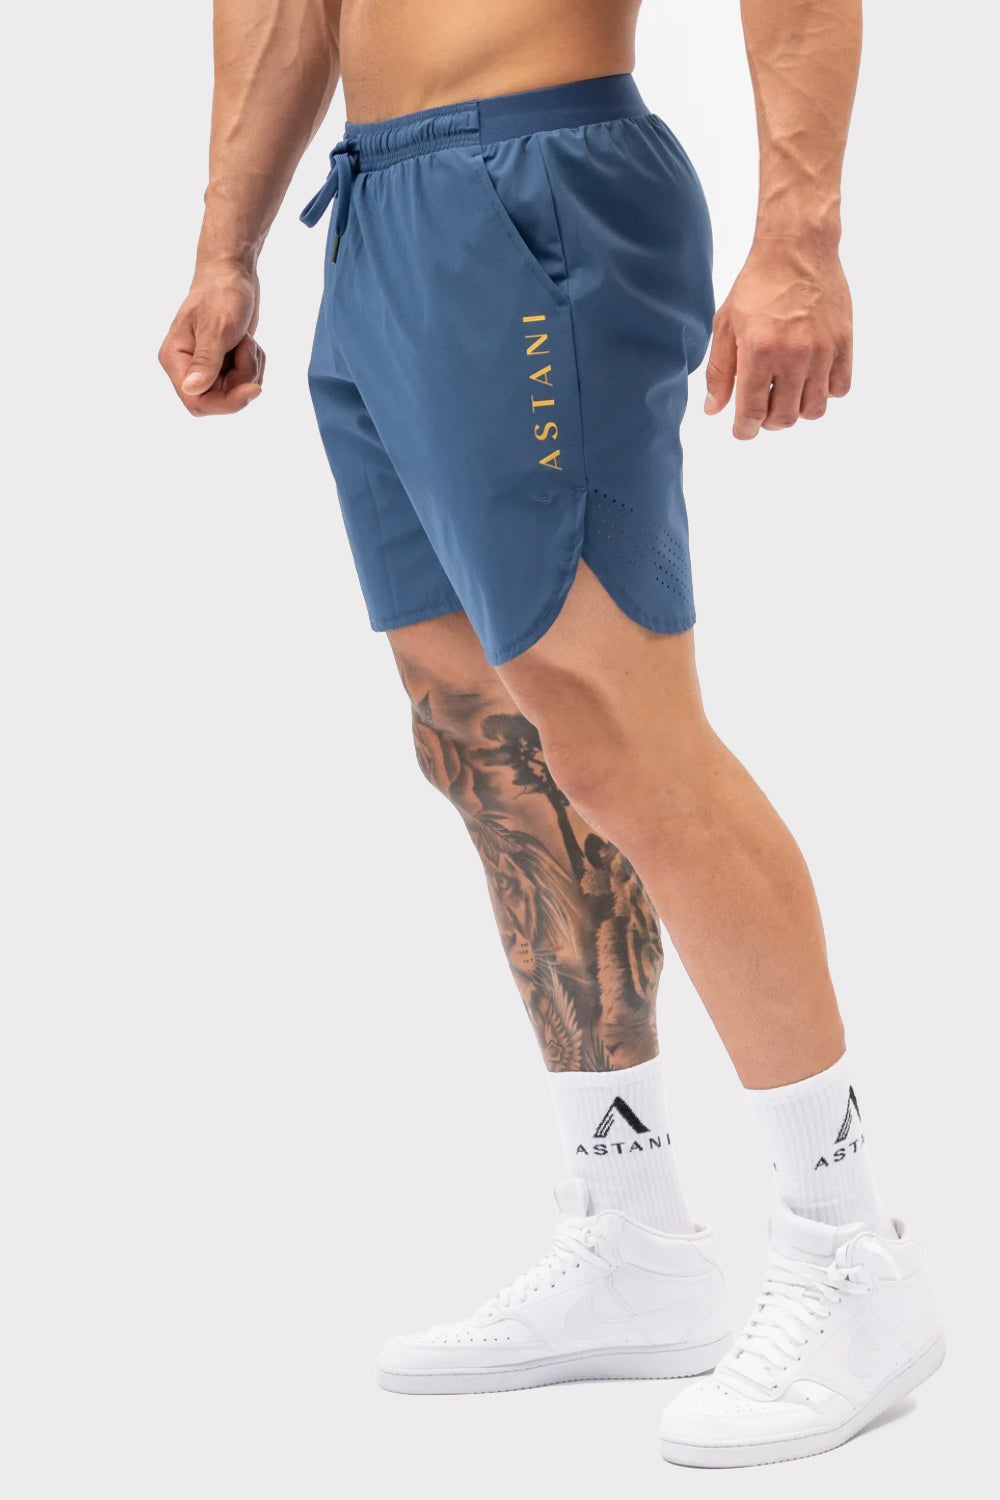 A VELOCE Shorts  - Azul